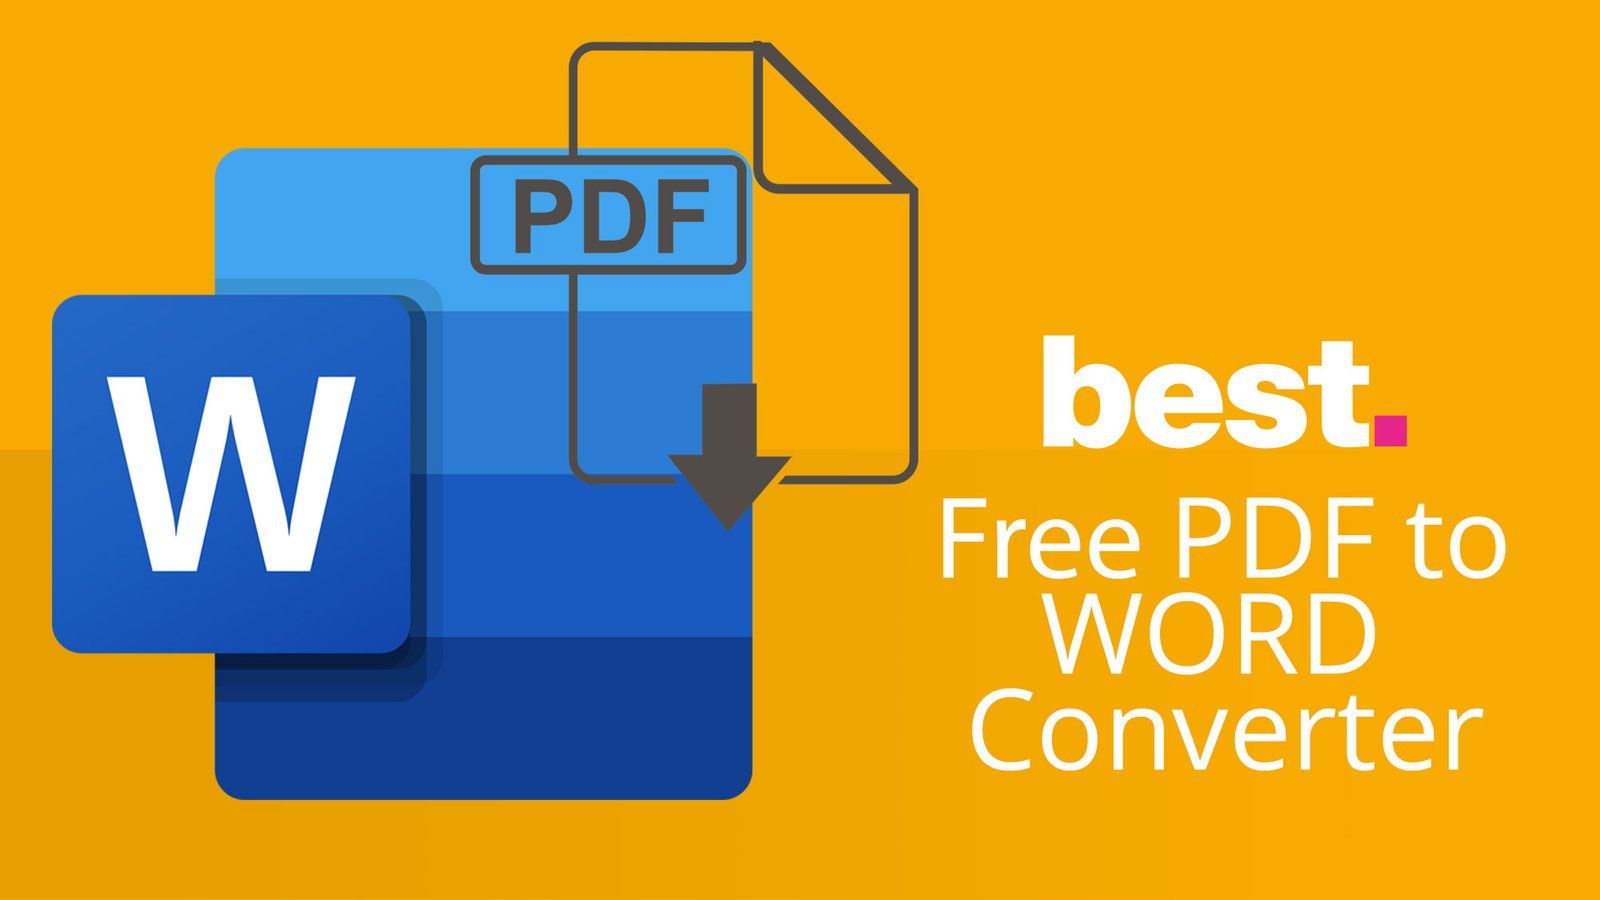 word to pdf converter offline